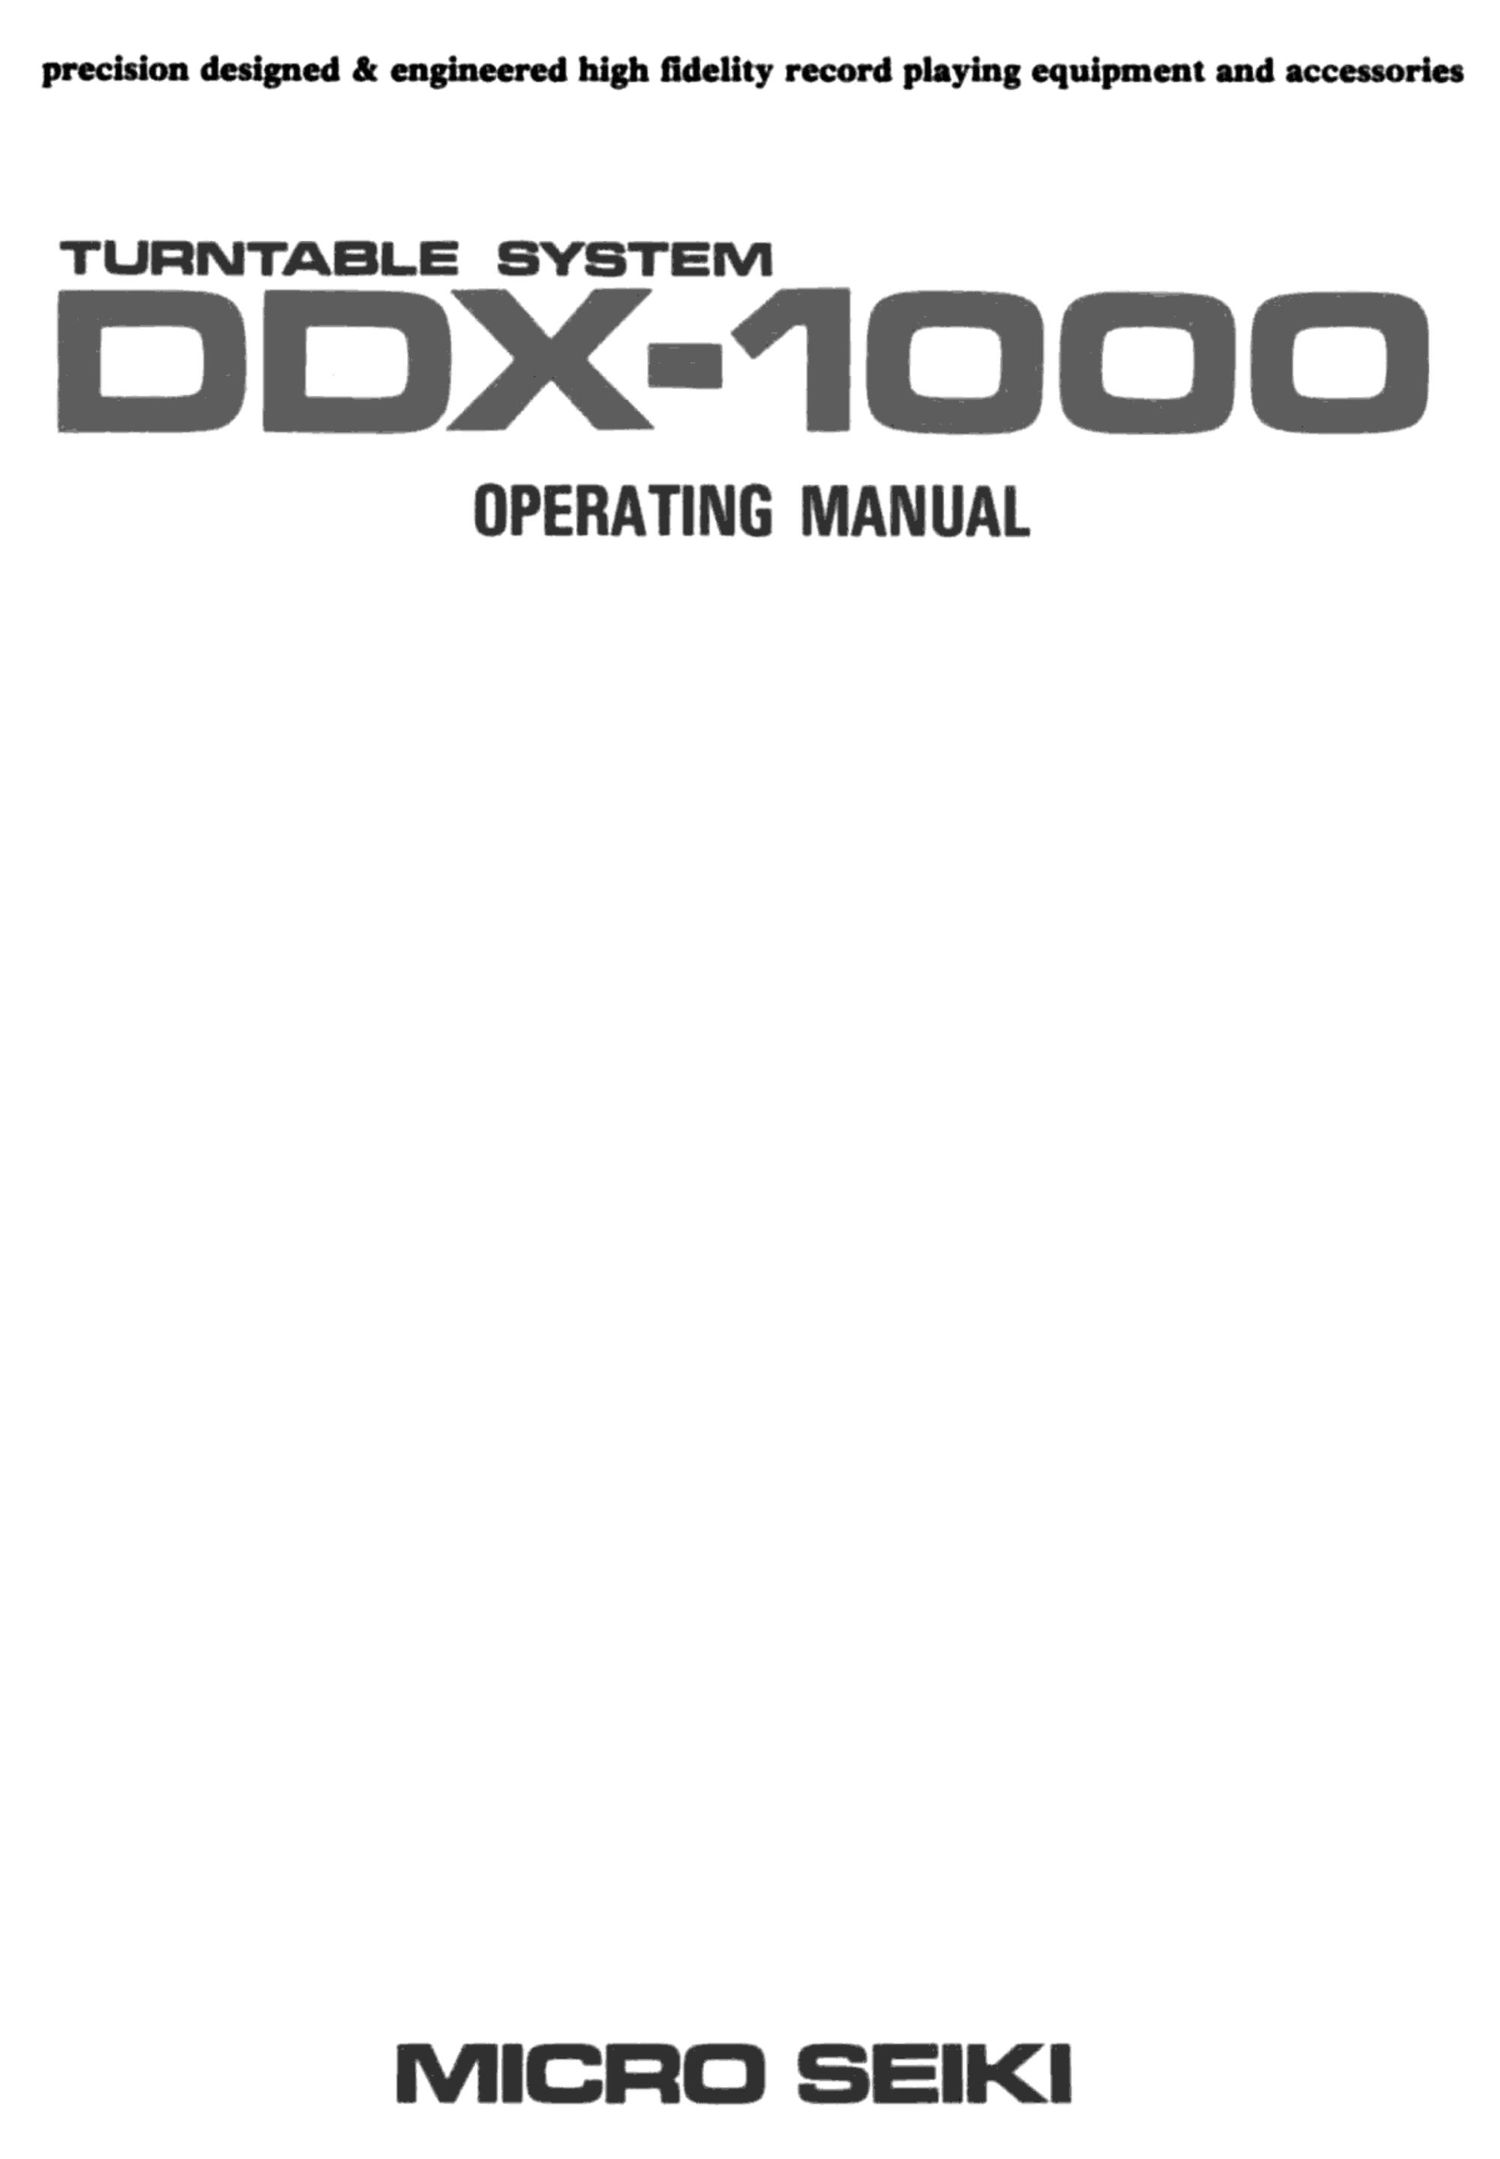 micro seiki ddx 1000 owners manual